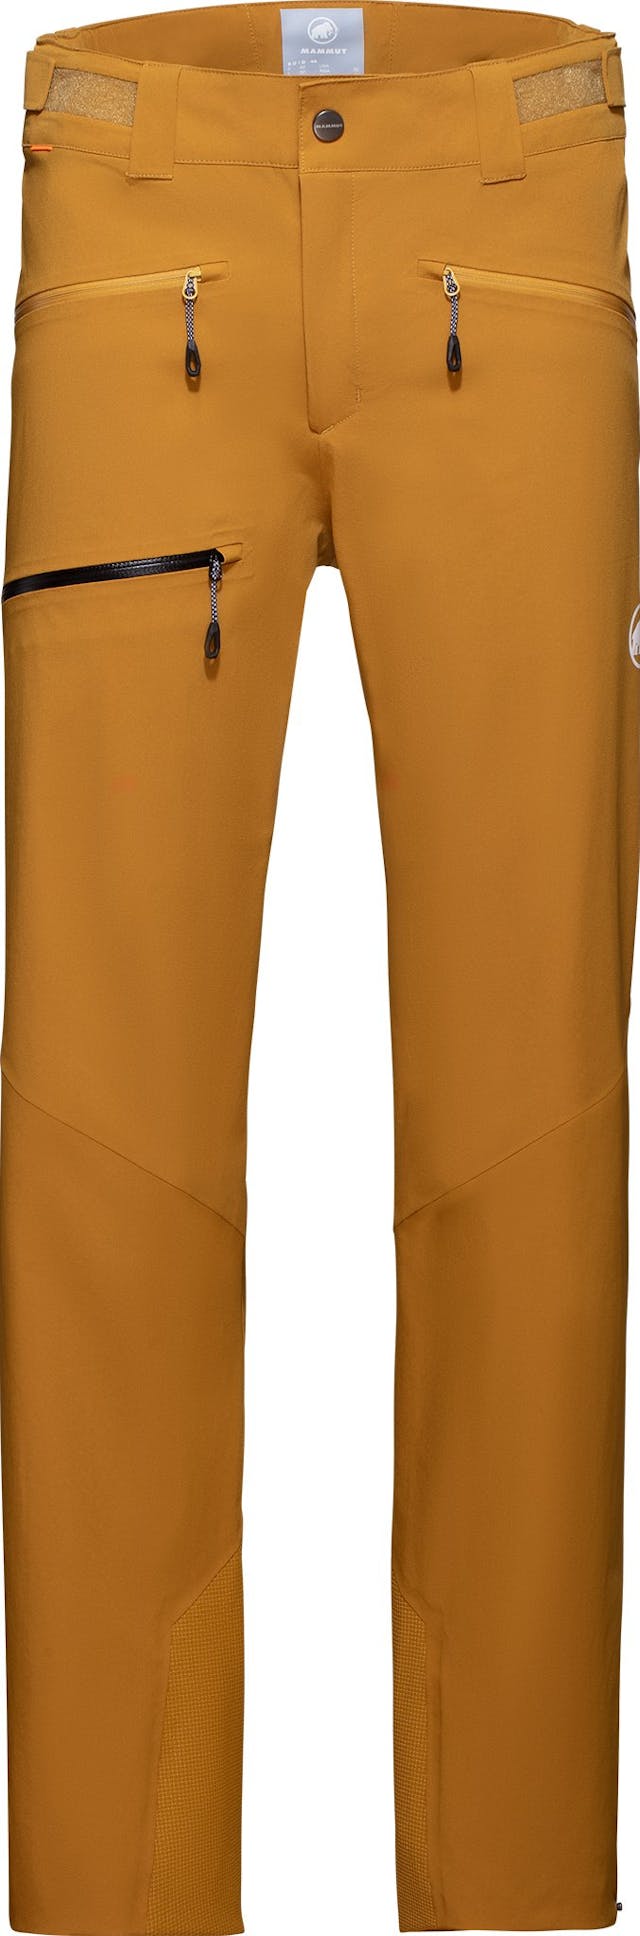 Product image for Stoney HS Pants - Men's